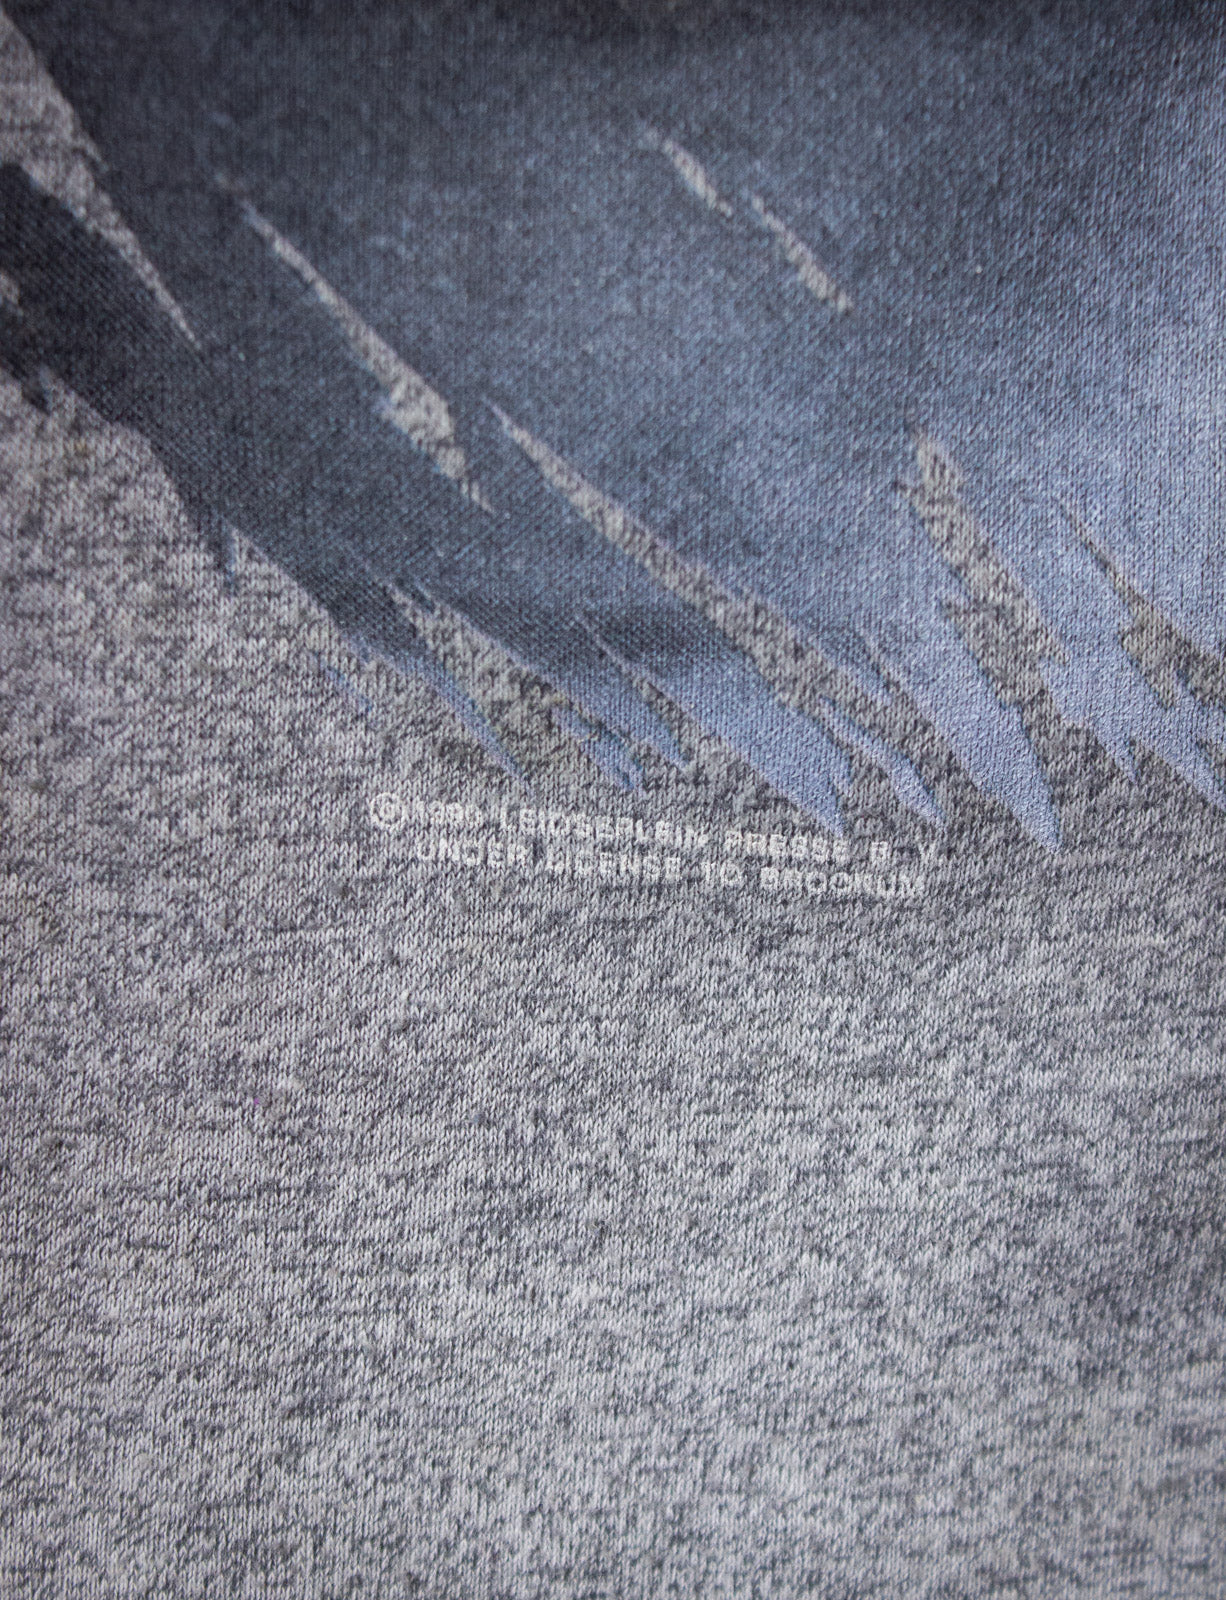 Vintage AC/DC The Razors Edge Concert T Shirt Raglan 1990 Grey/Black Large